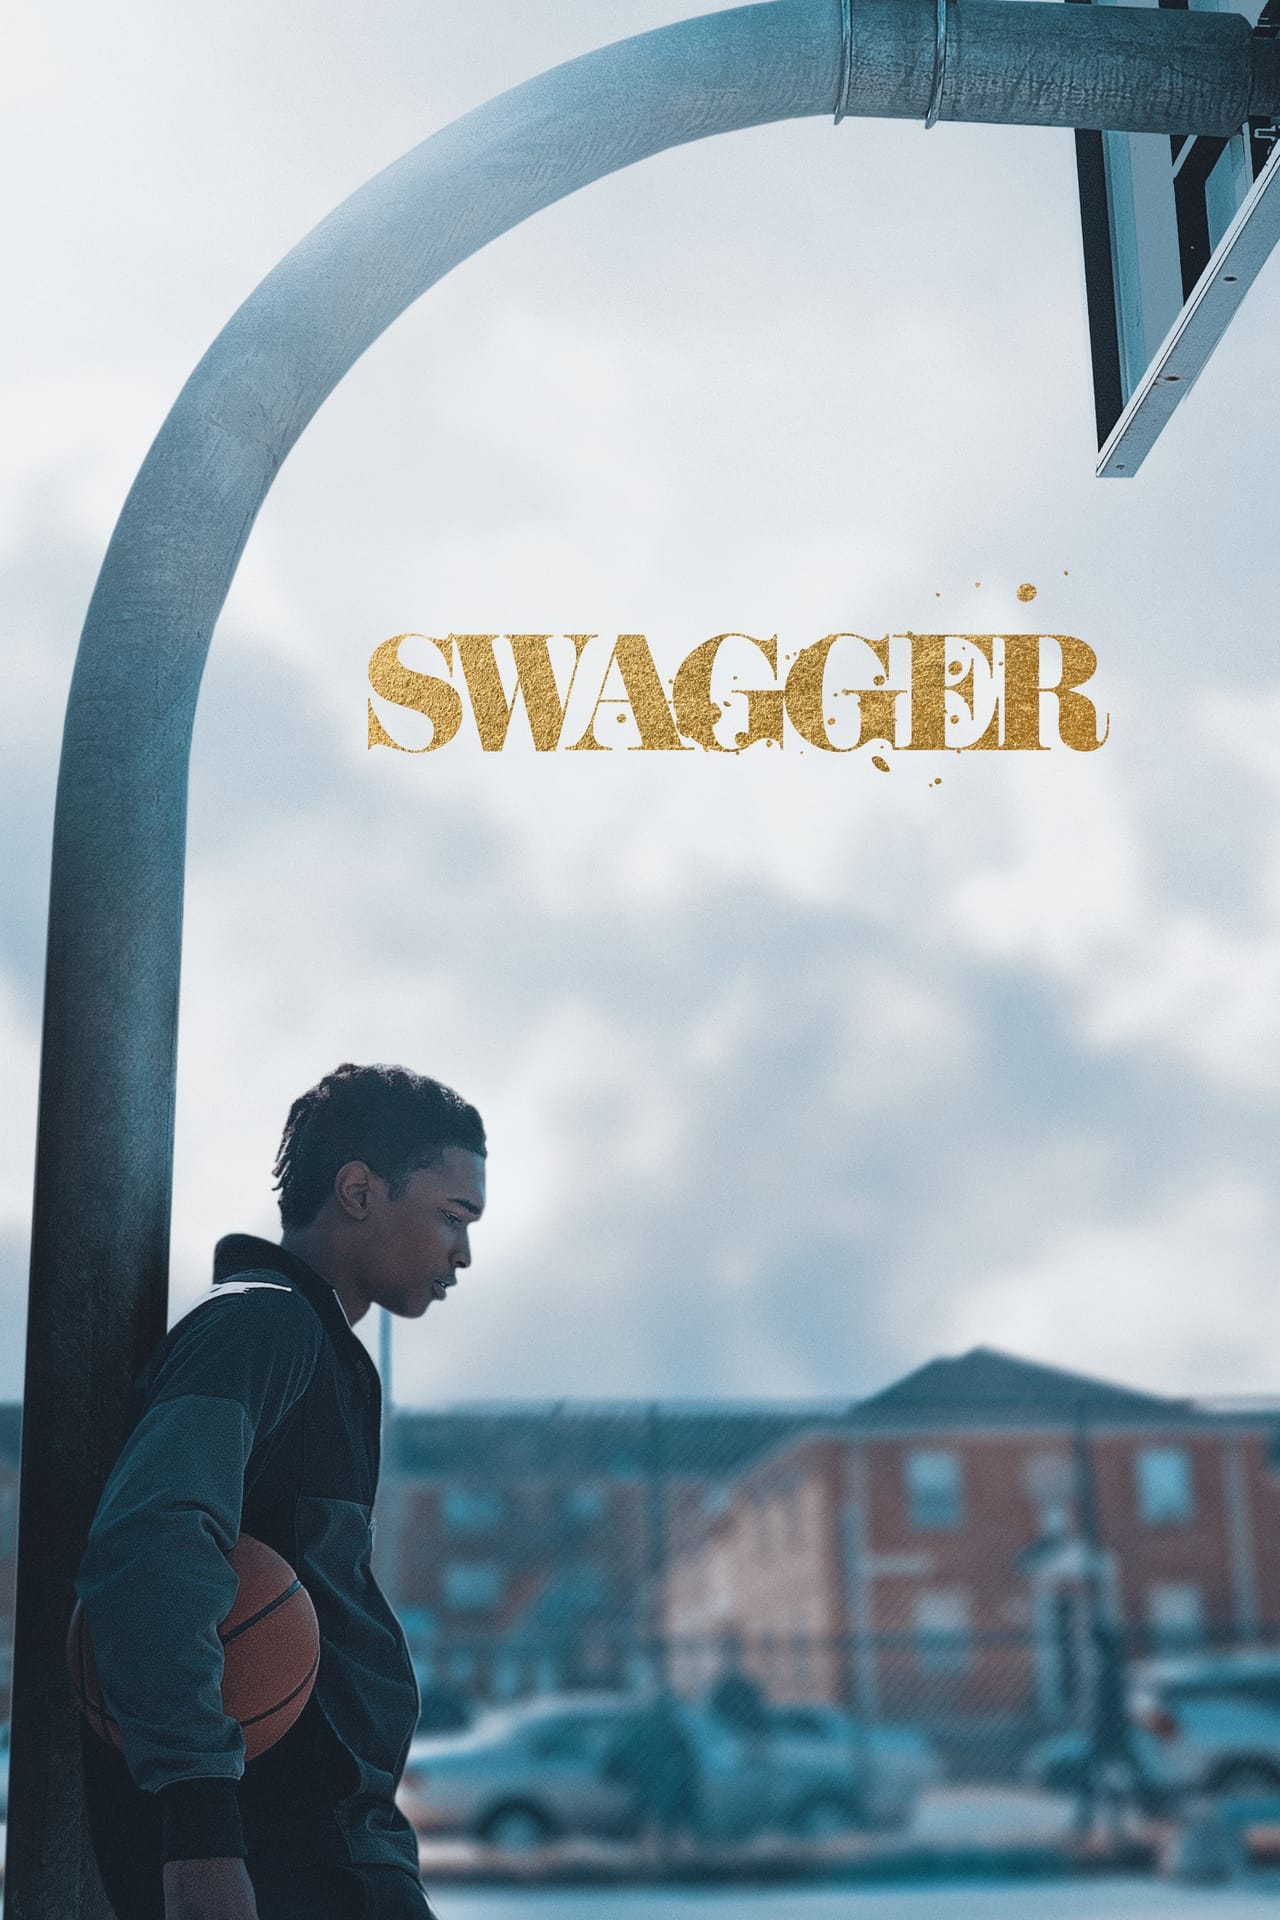 Swagger (season 1)